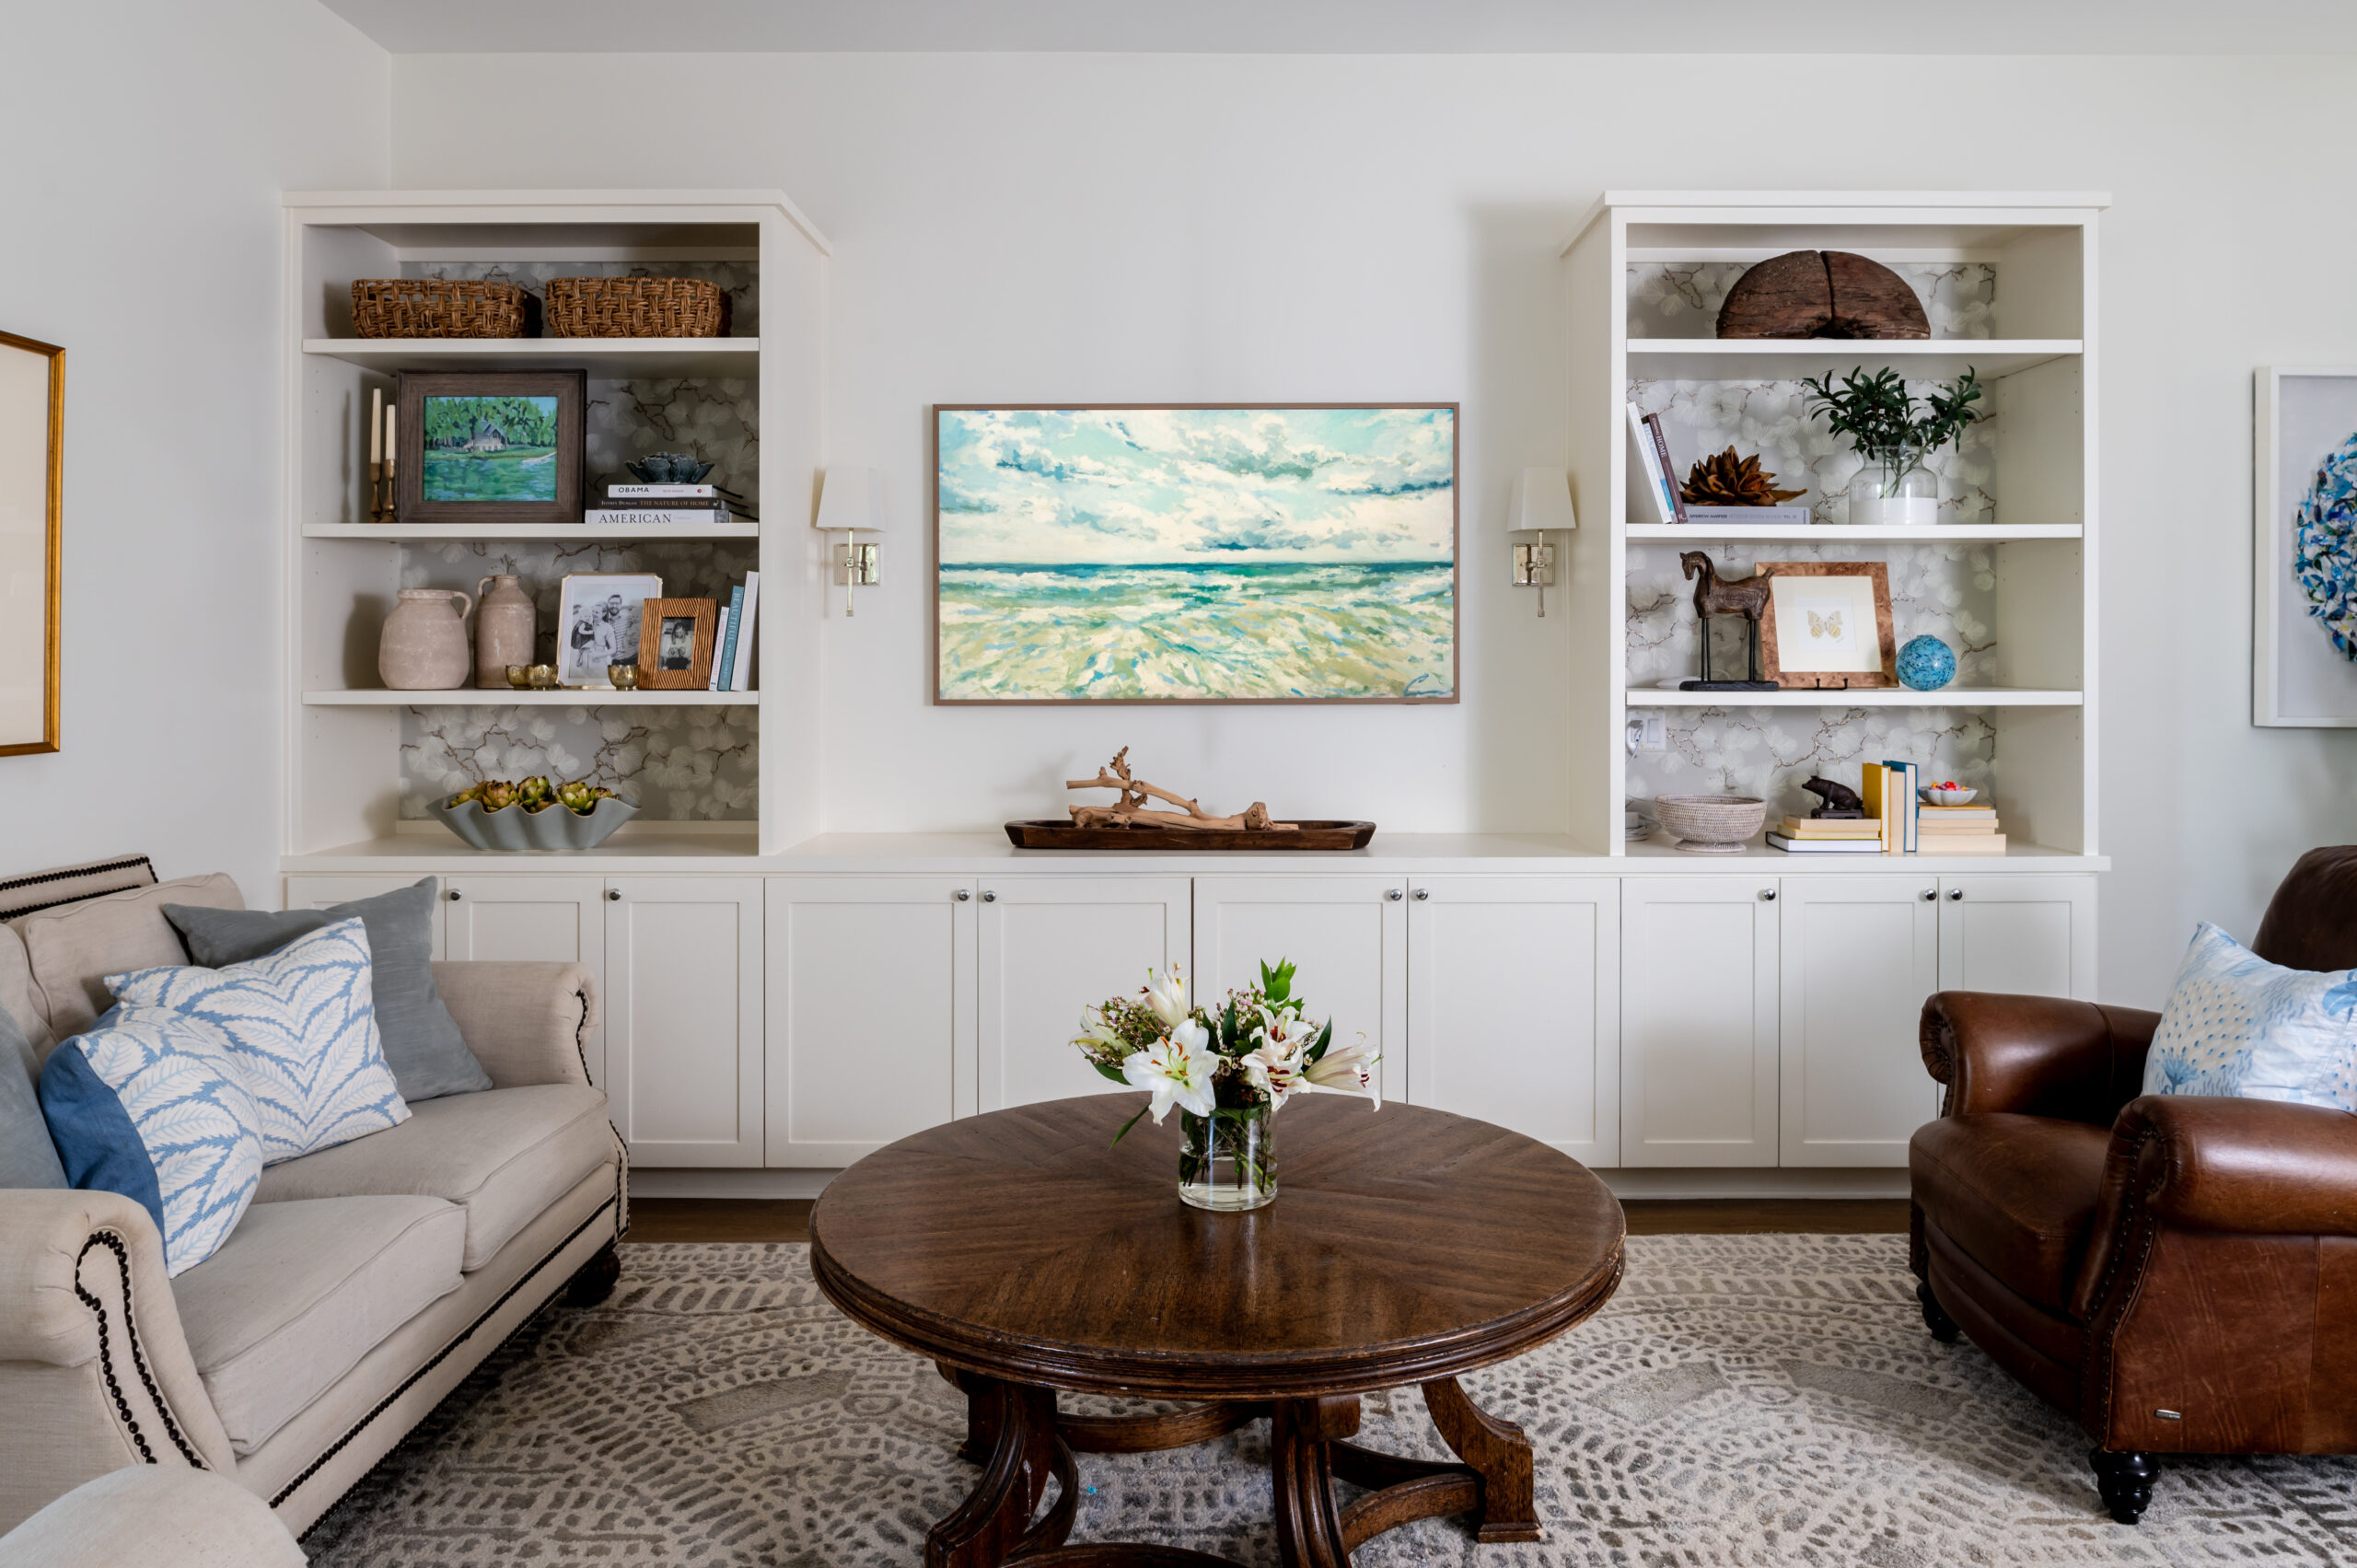 Living room interior design with beautiful bookshelf and decor